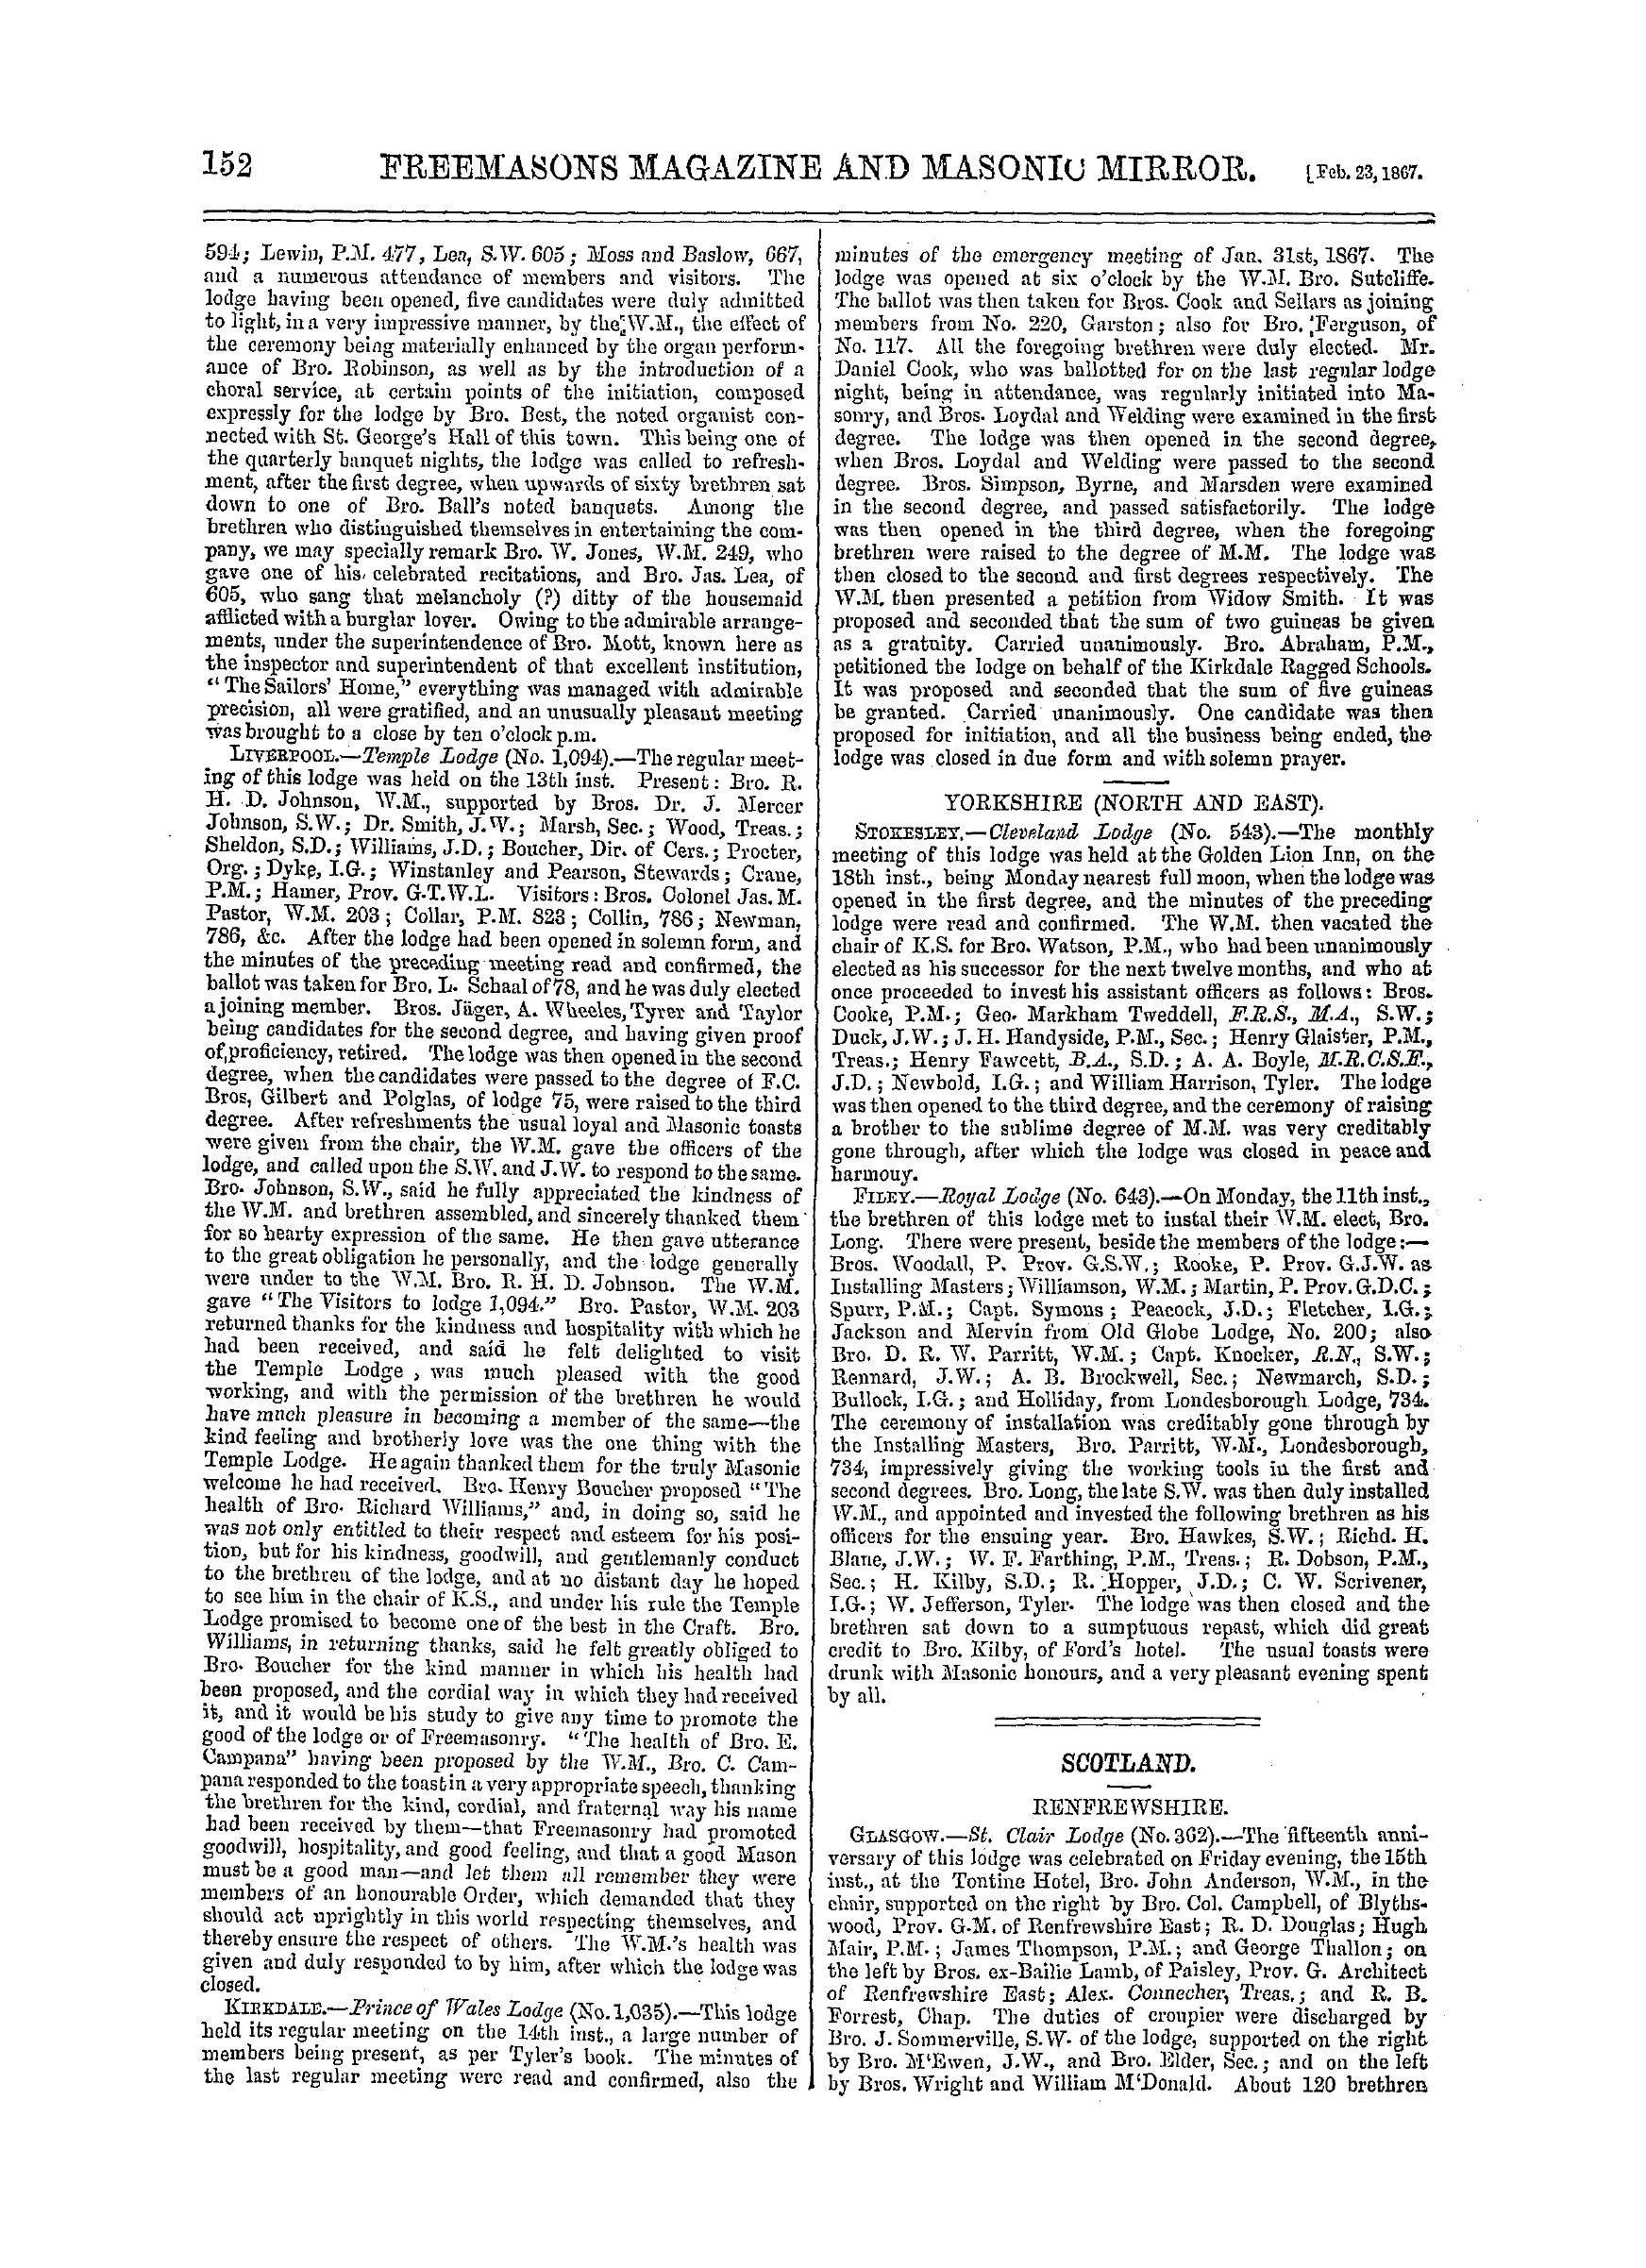 The Freemasons' Monthly Magazine: 1867-02-23 - Scotland.